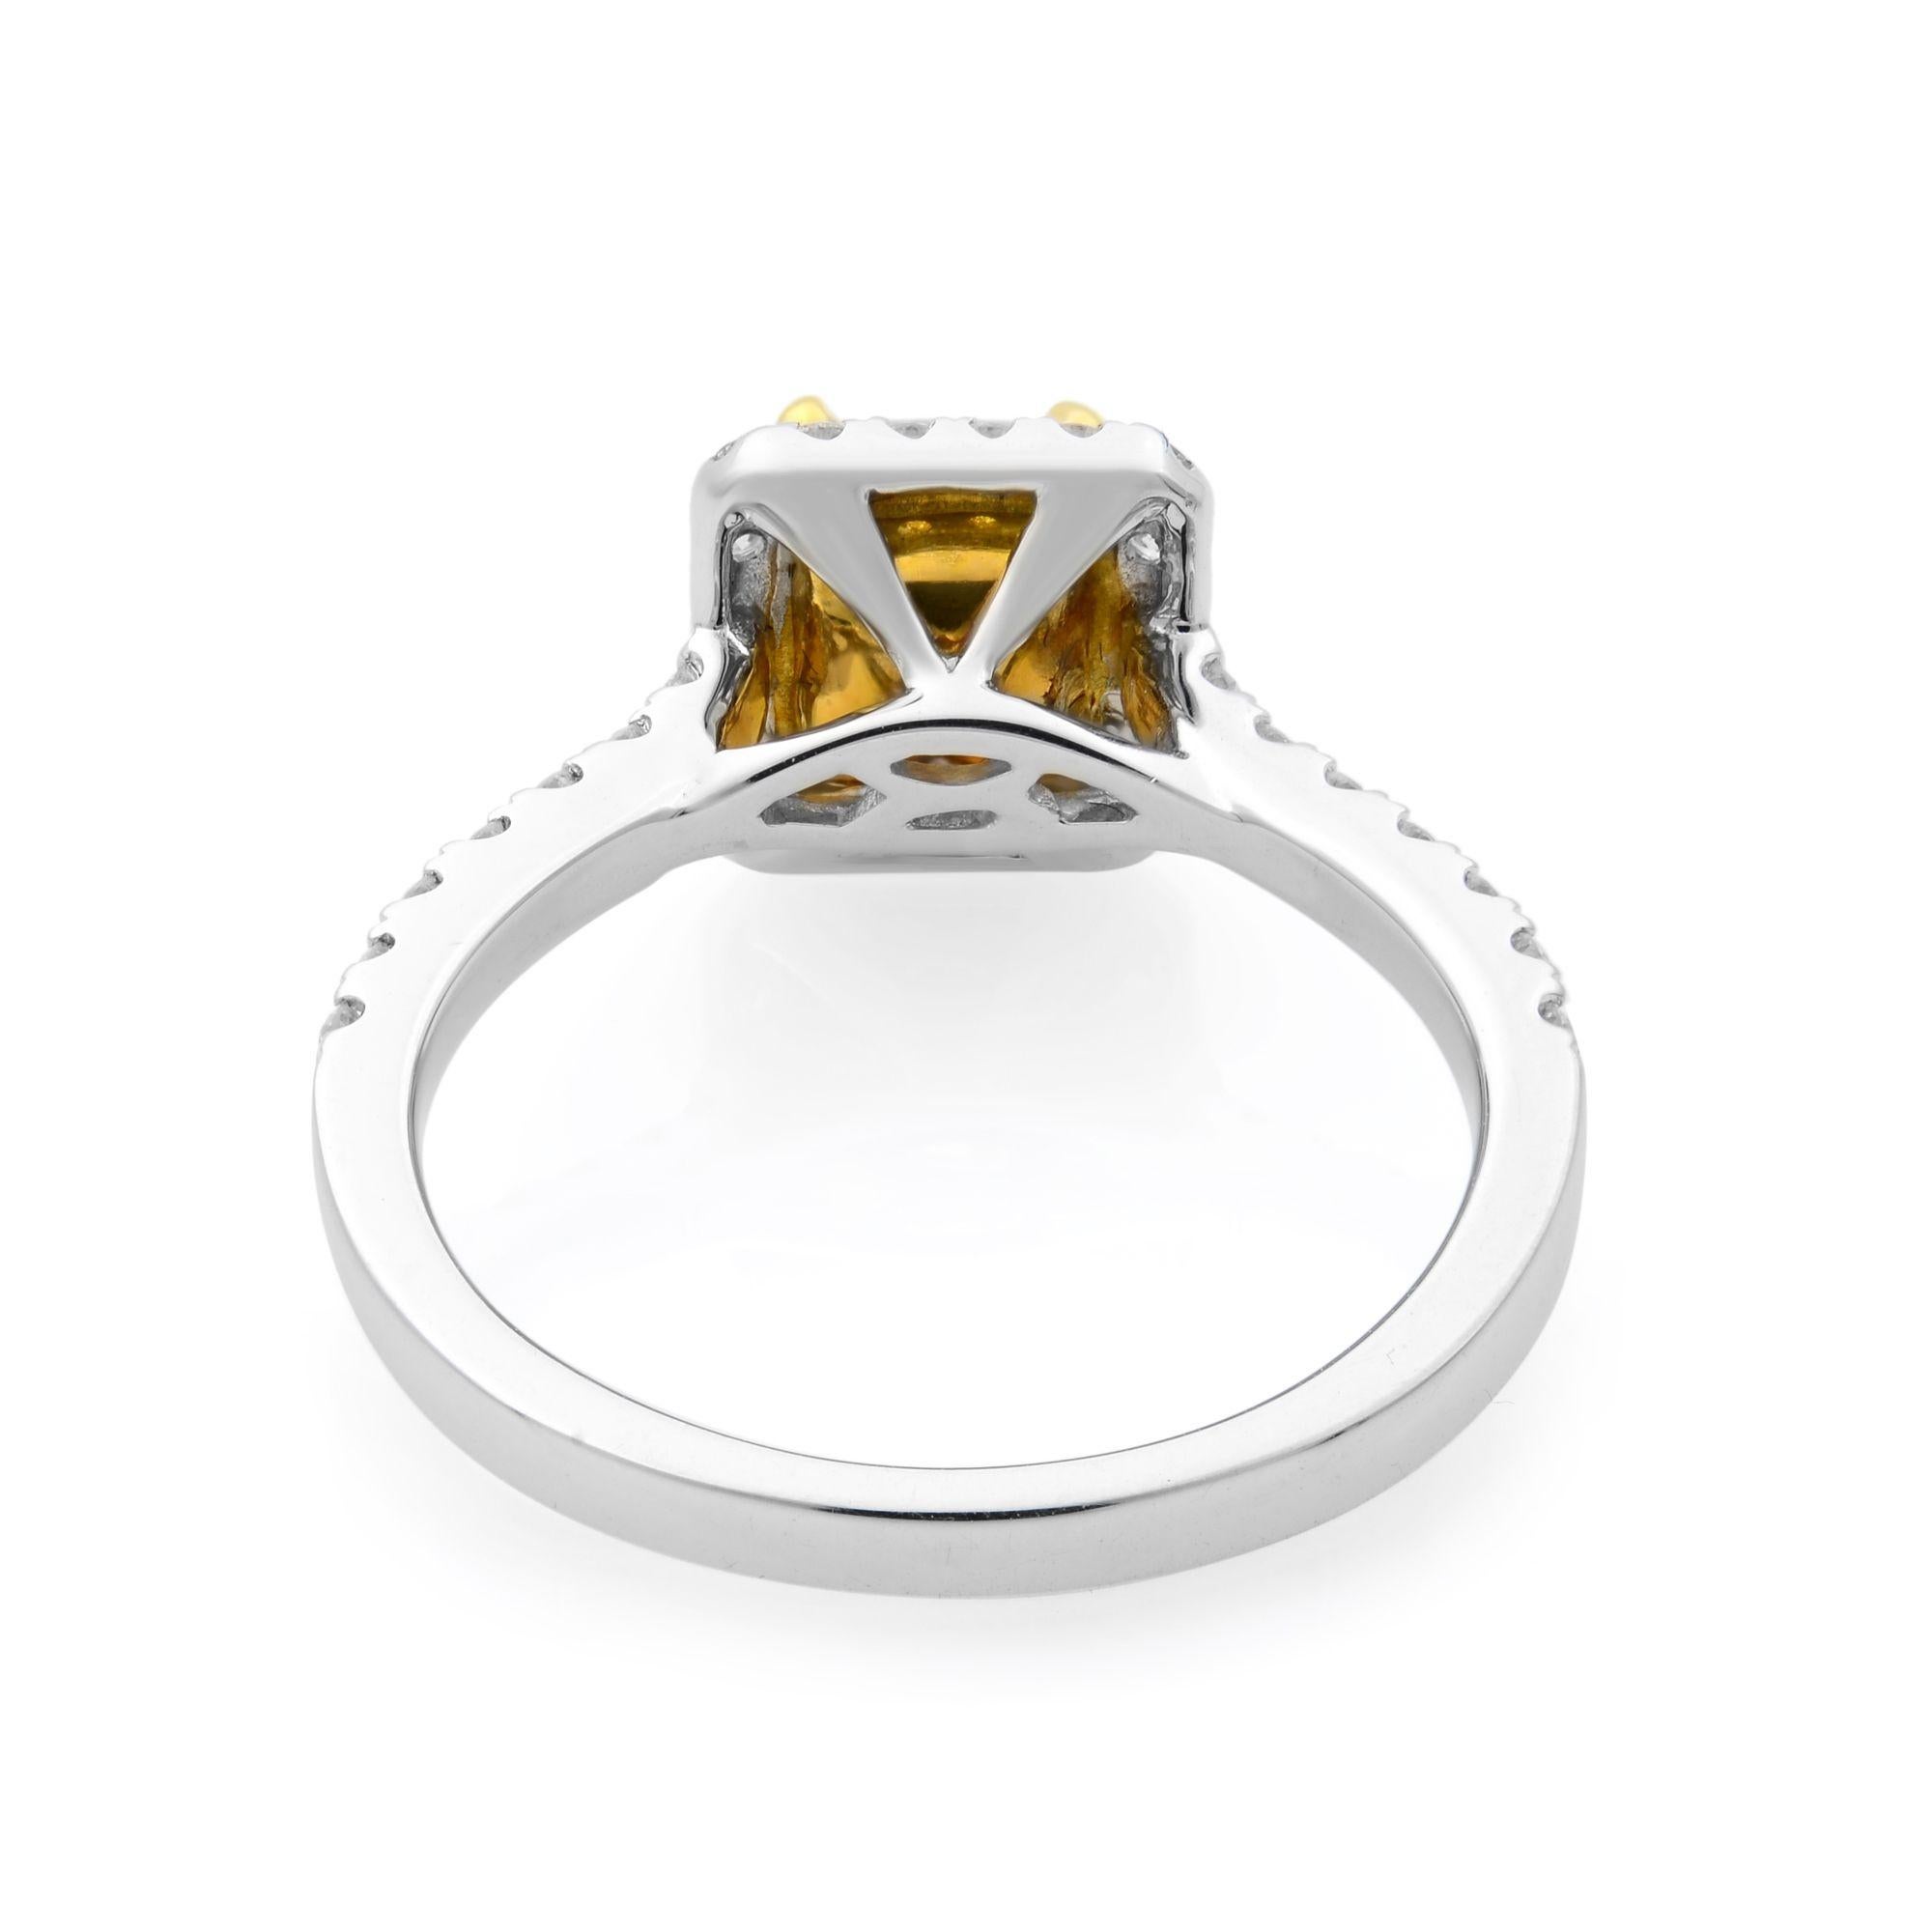 Cushion Cut Rachel Koen 18 Karat White Gold Fancy Yellow Diamond Ring with Halo 1.36 Carat